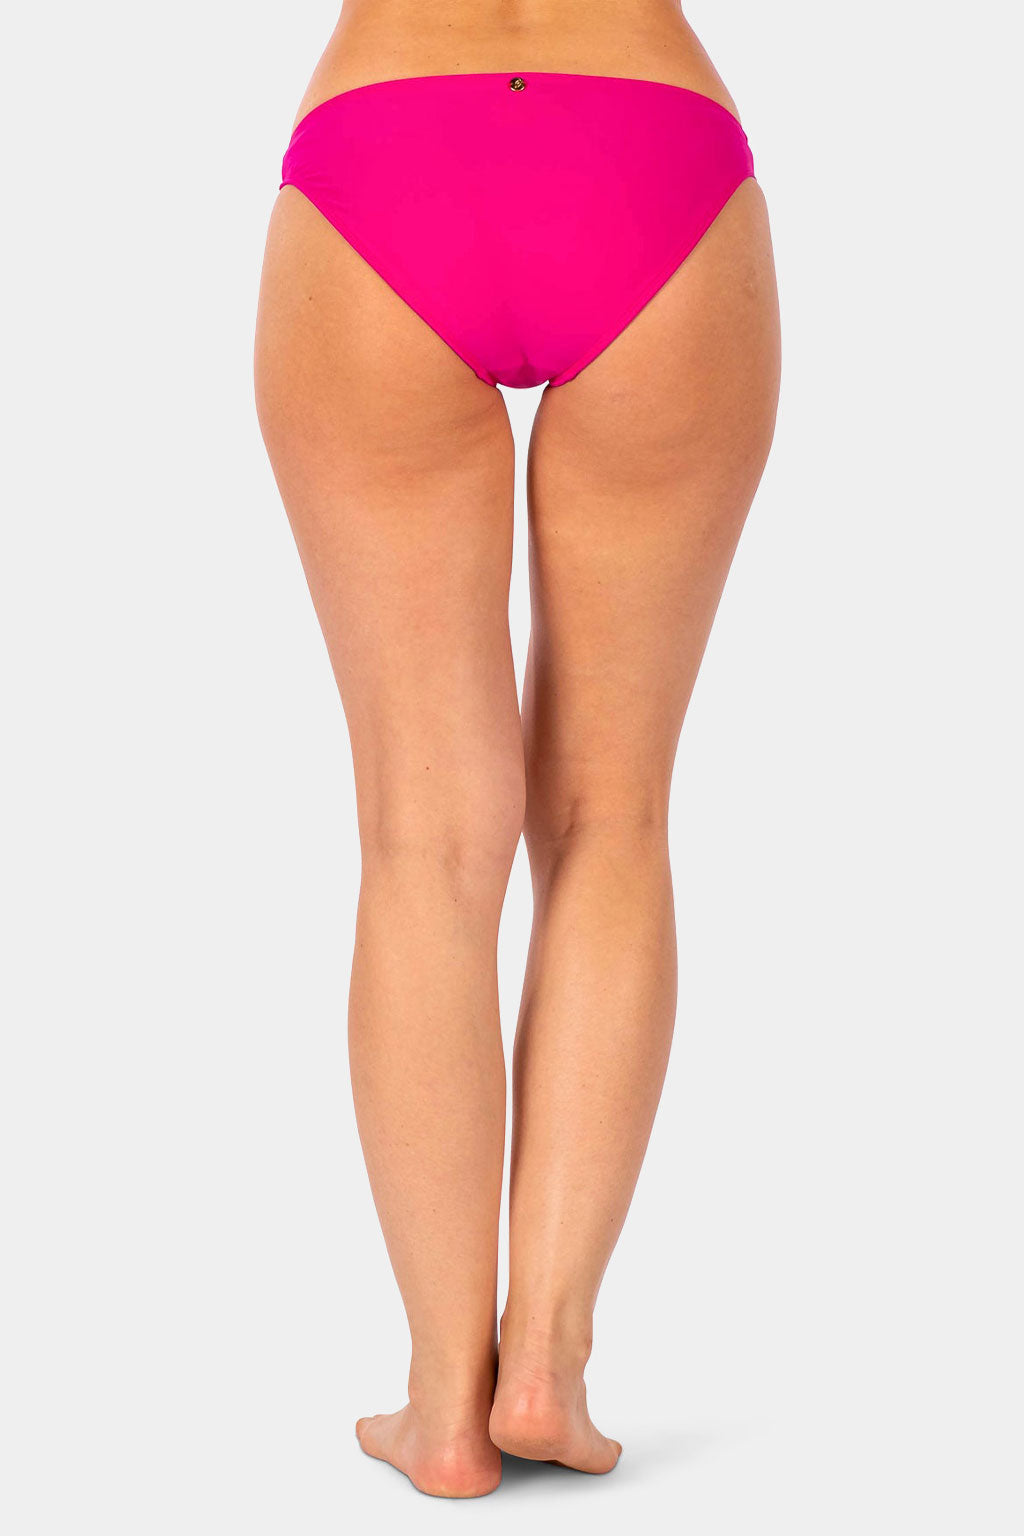 Coega - Ladies Bikini Bottom Sporty